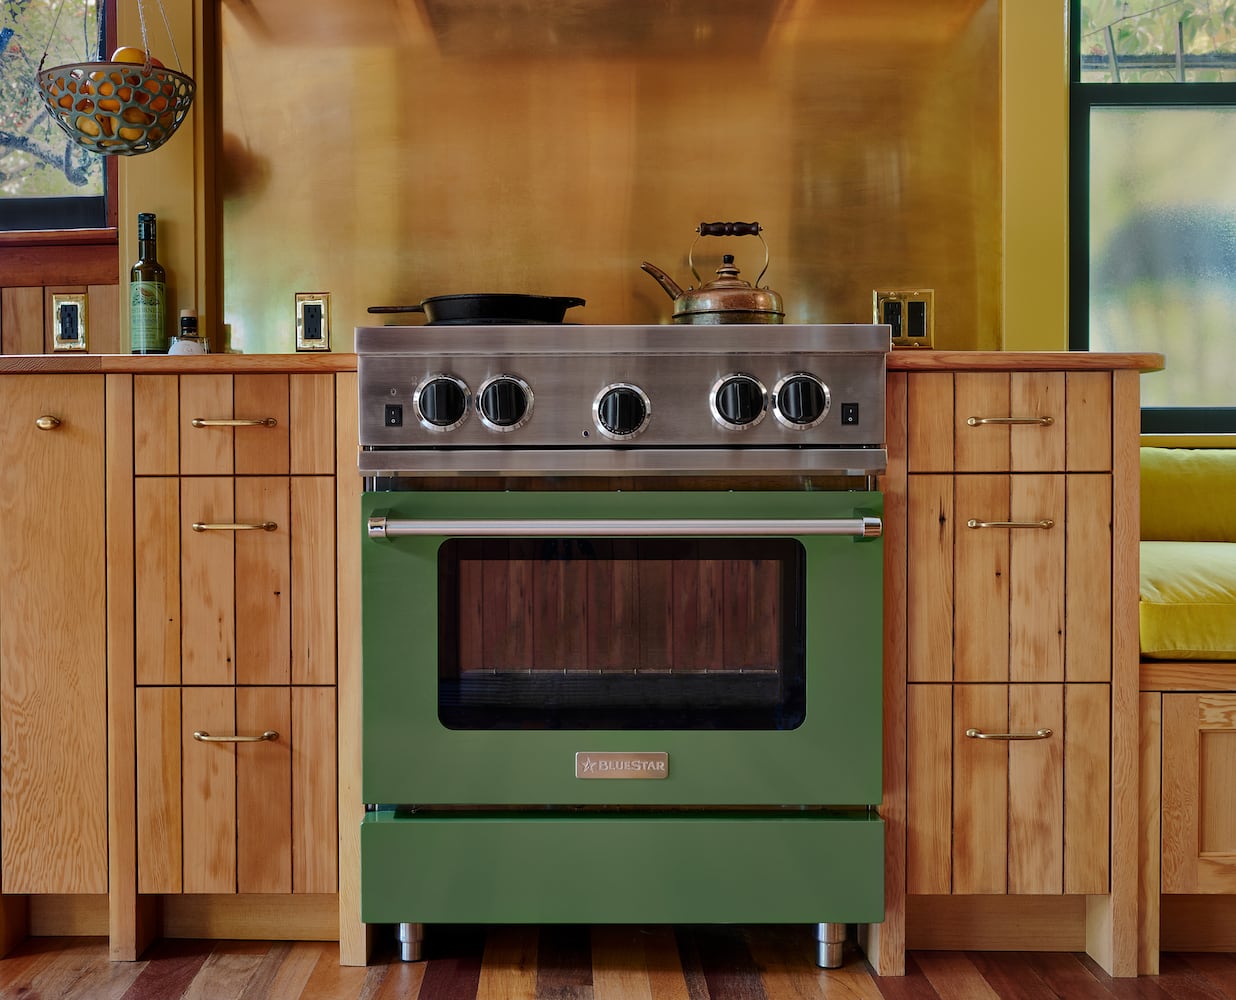 Perfeclty fitted BlueStar cooking range, wood paneled drawers, brass backsplash